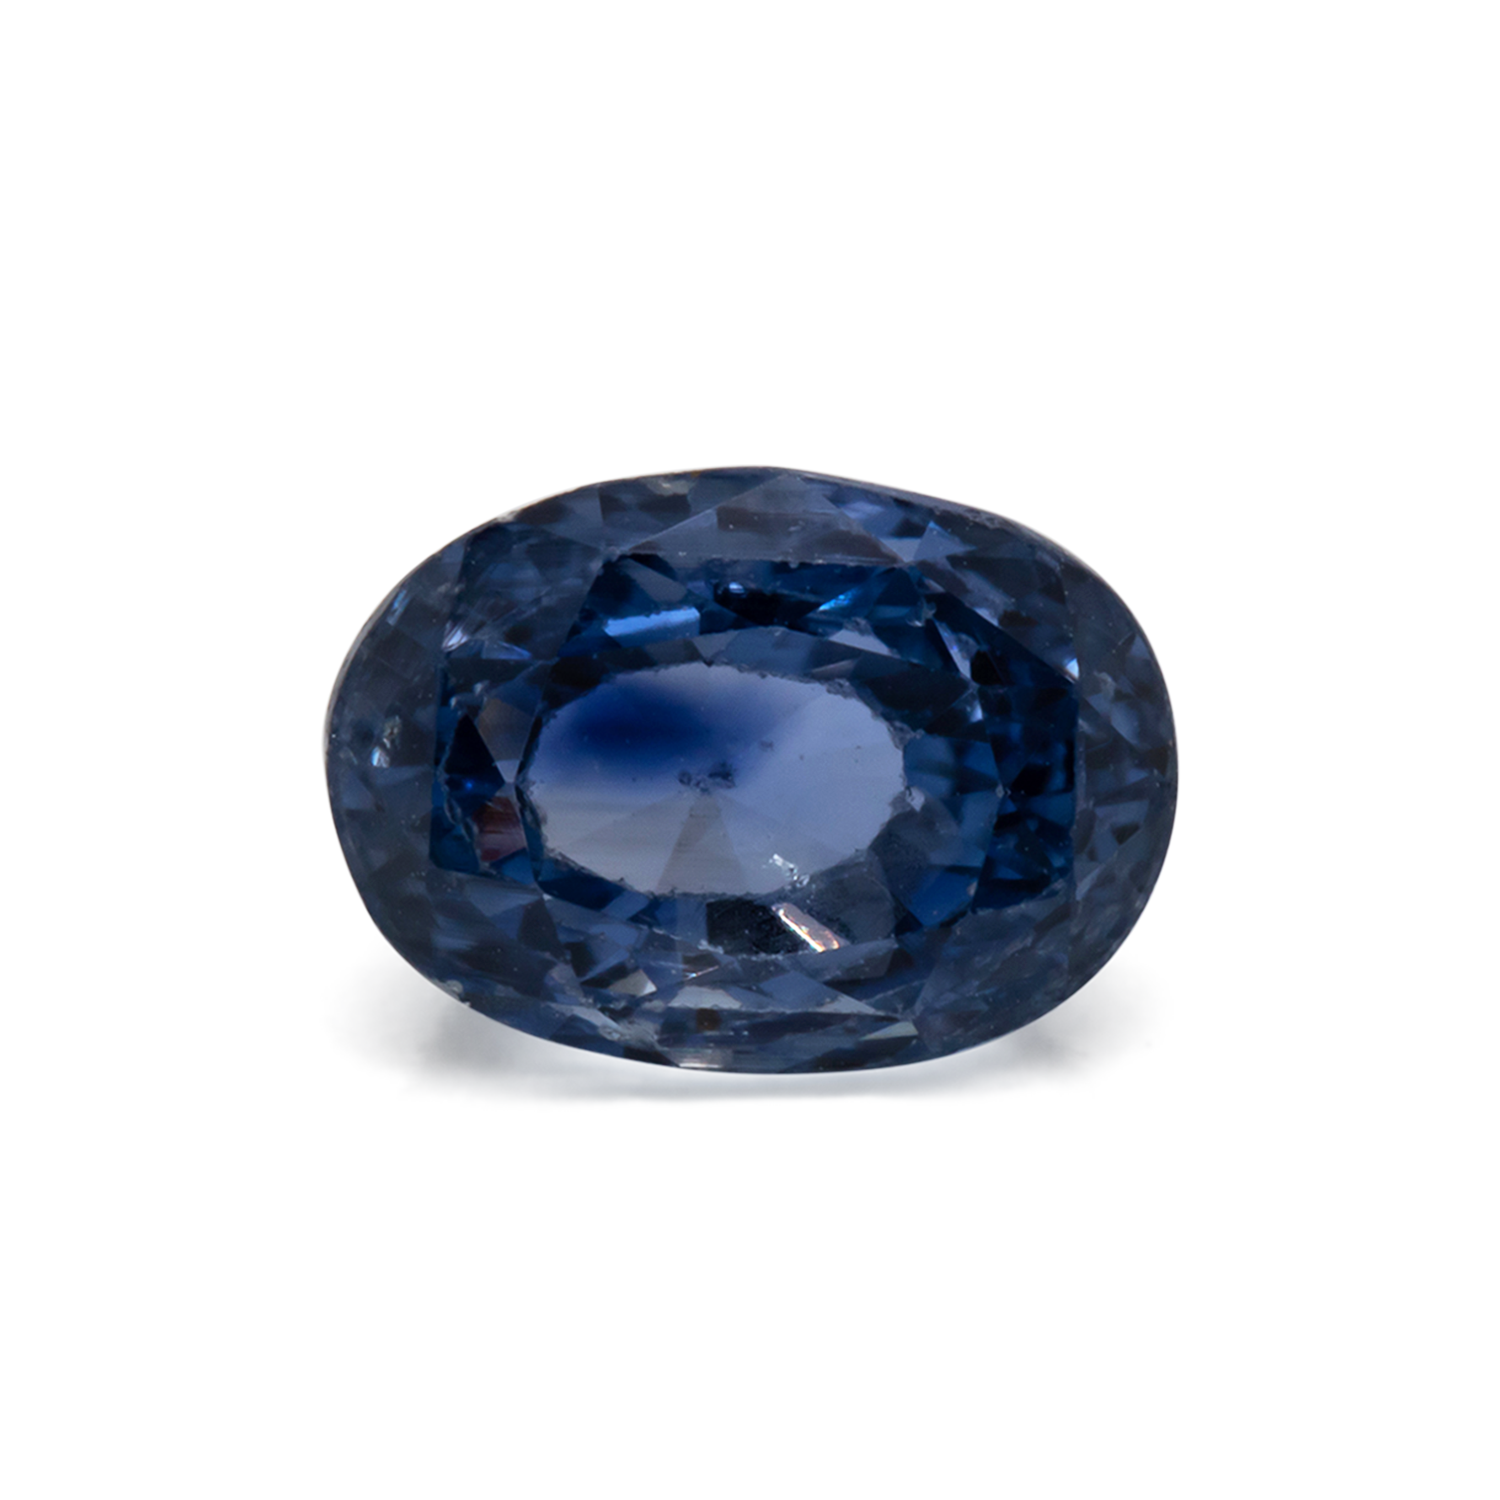 Sapphire - blue, cushion, 11x9 mm, 4.49 cts, No. XSR11246